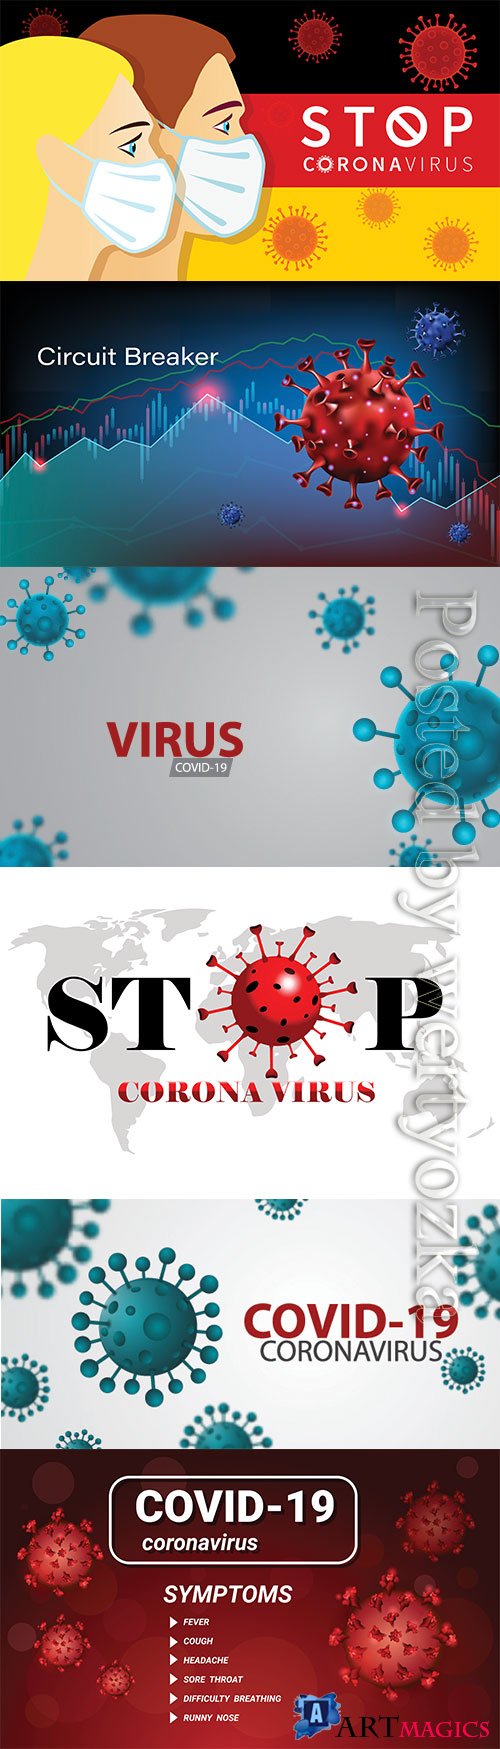 Pandemic coronavirus or covid-19 virus effect to stock market business